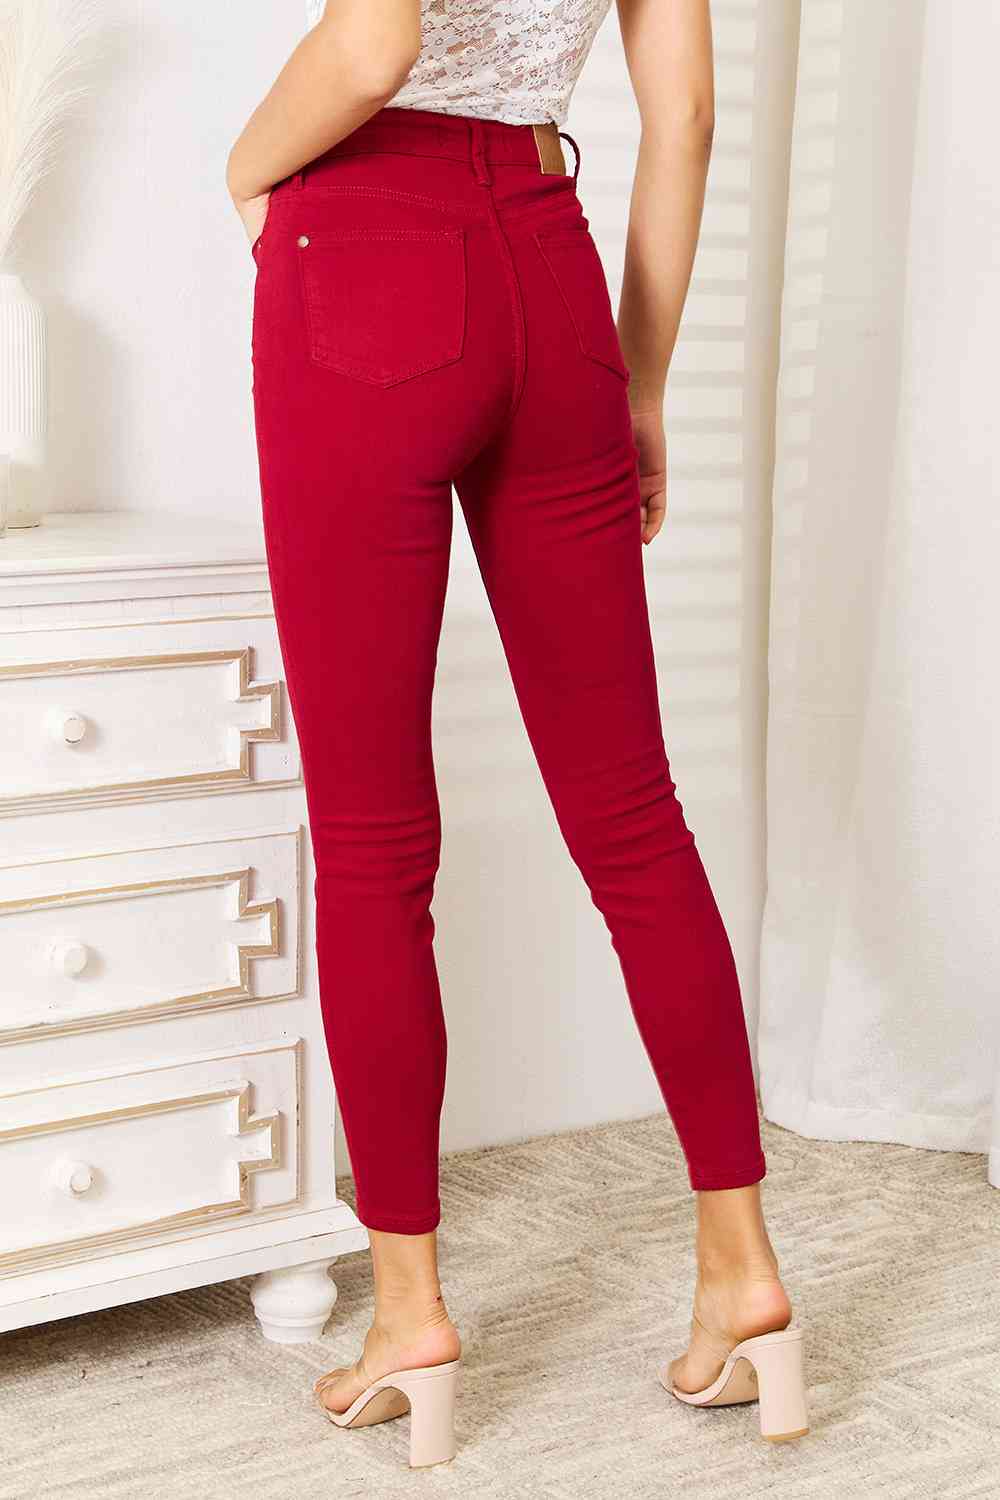 Judy Blue Scarlet High Waist Tummy Control Skinny Jeans Red High Waist Tummy Control Jeans by Vim&Vigor | Vim&Vigor Boutique